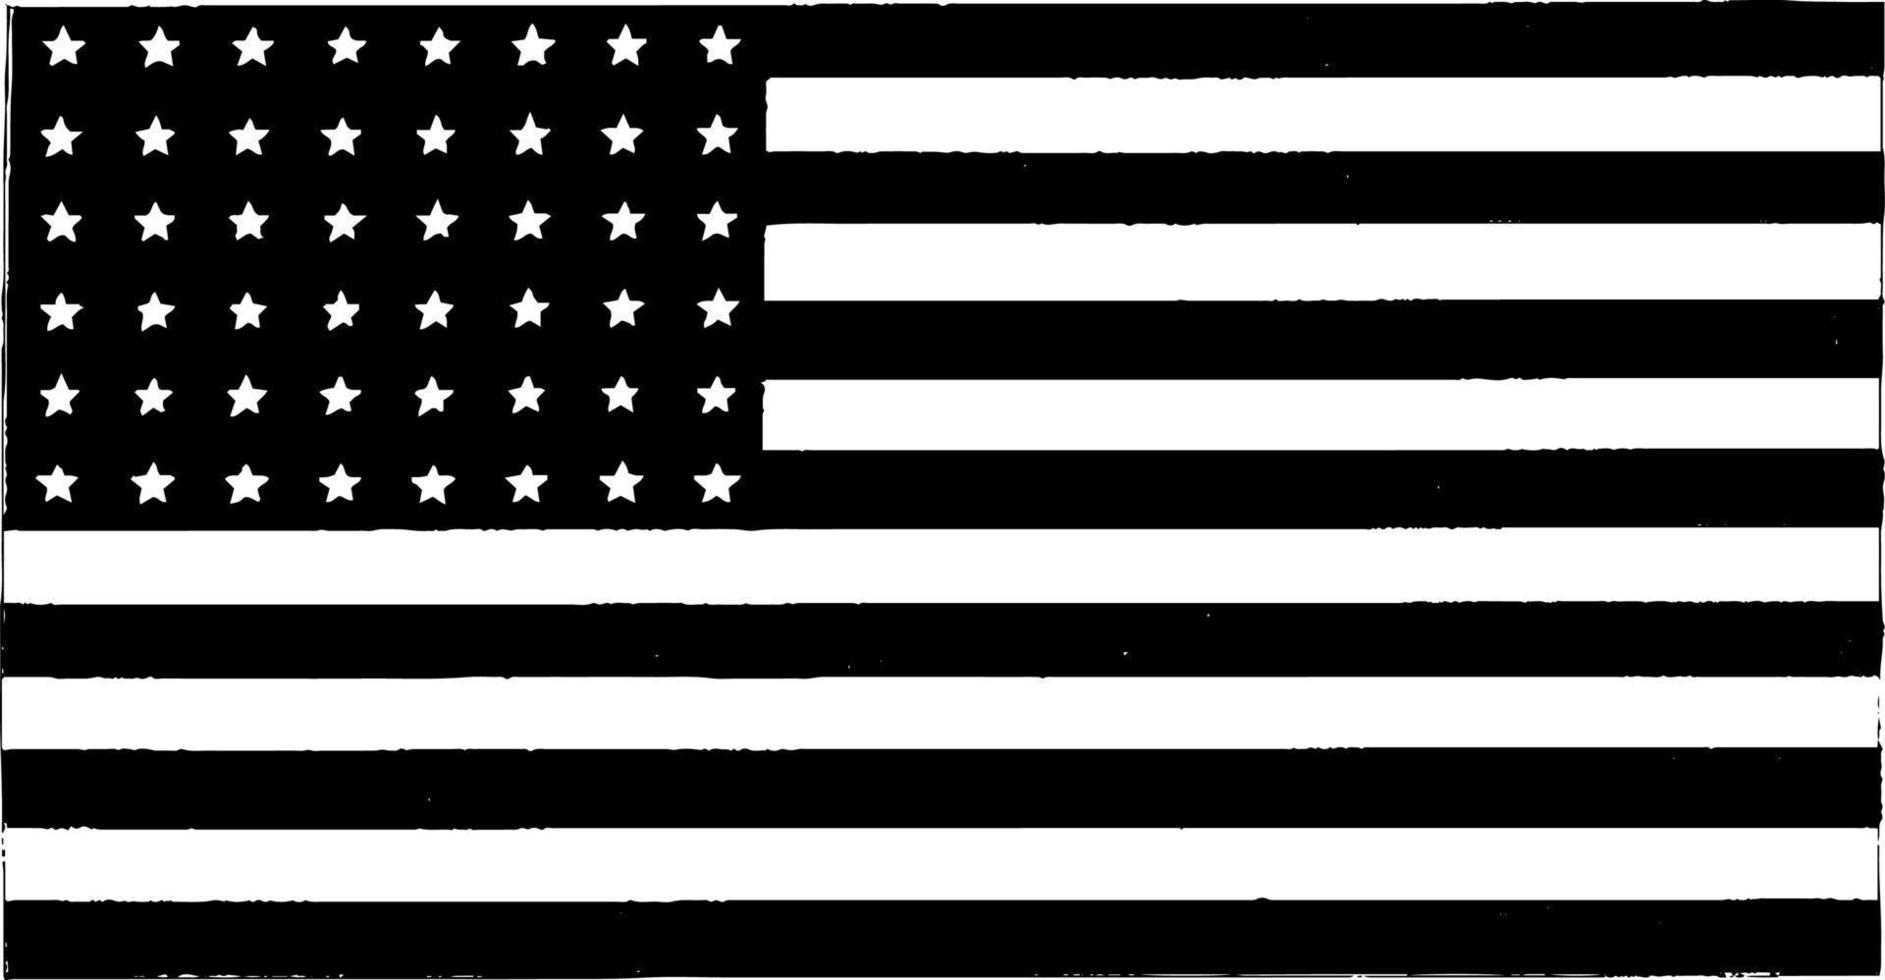 United States, 1923, 48-star flag, vintage illustration vector